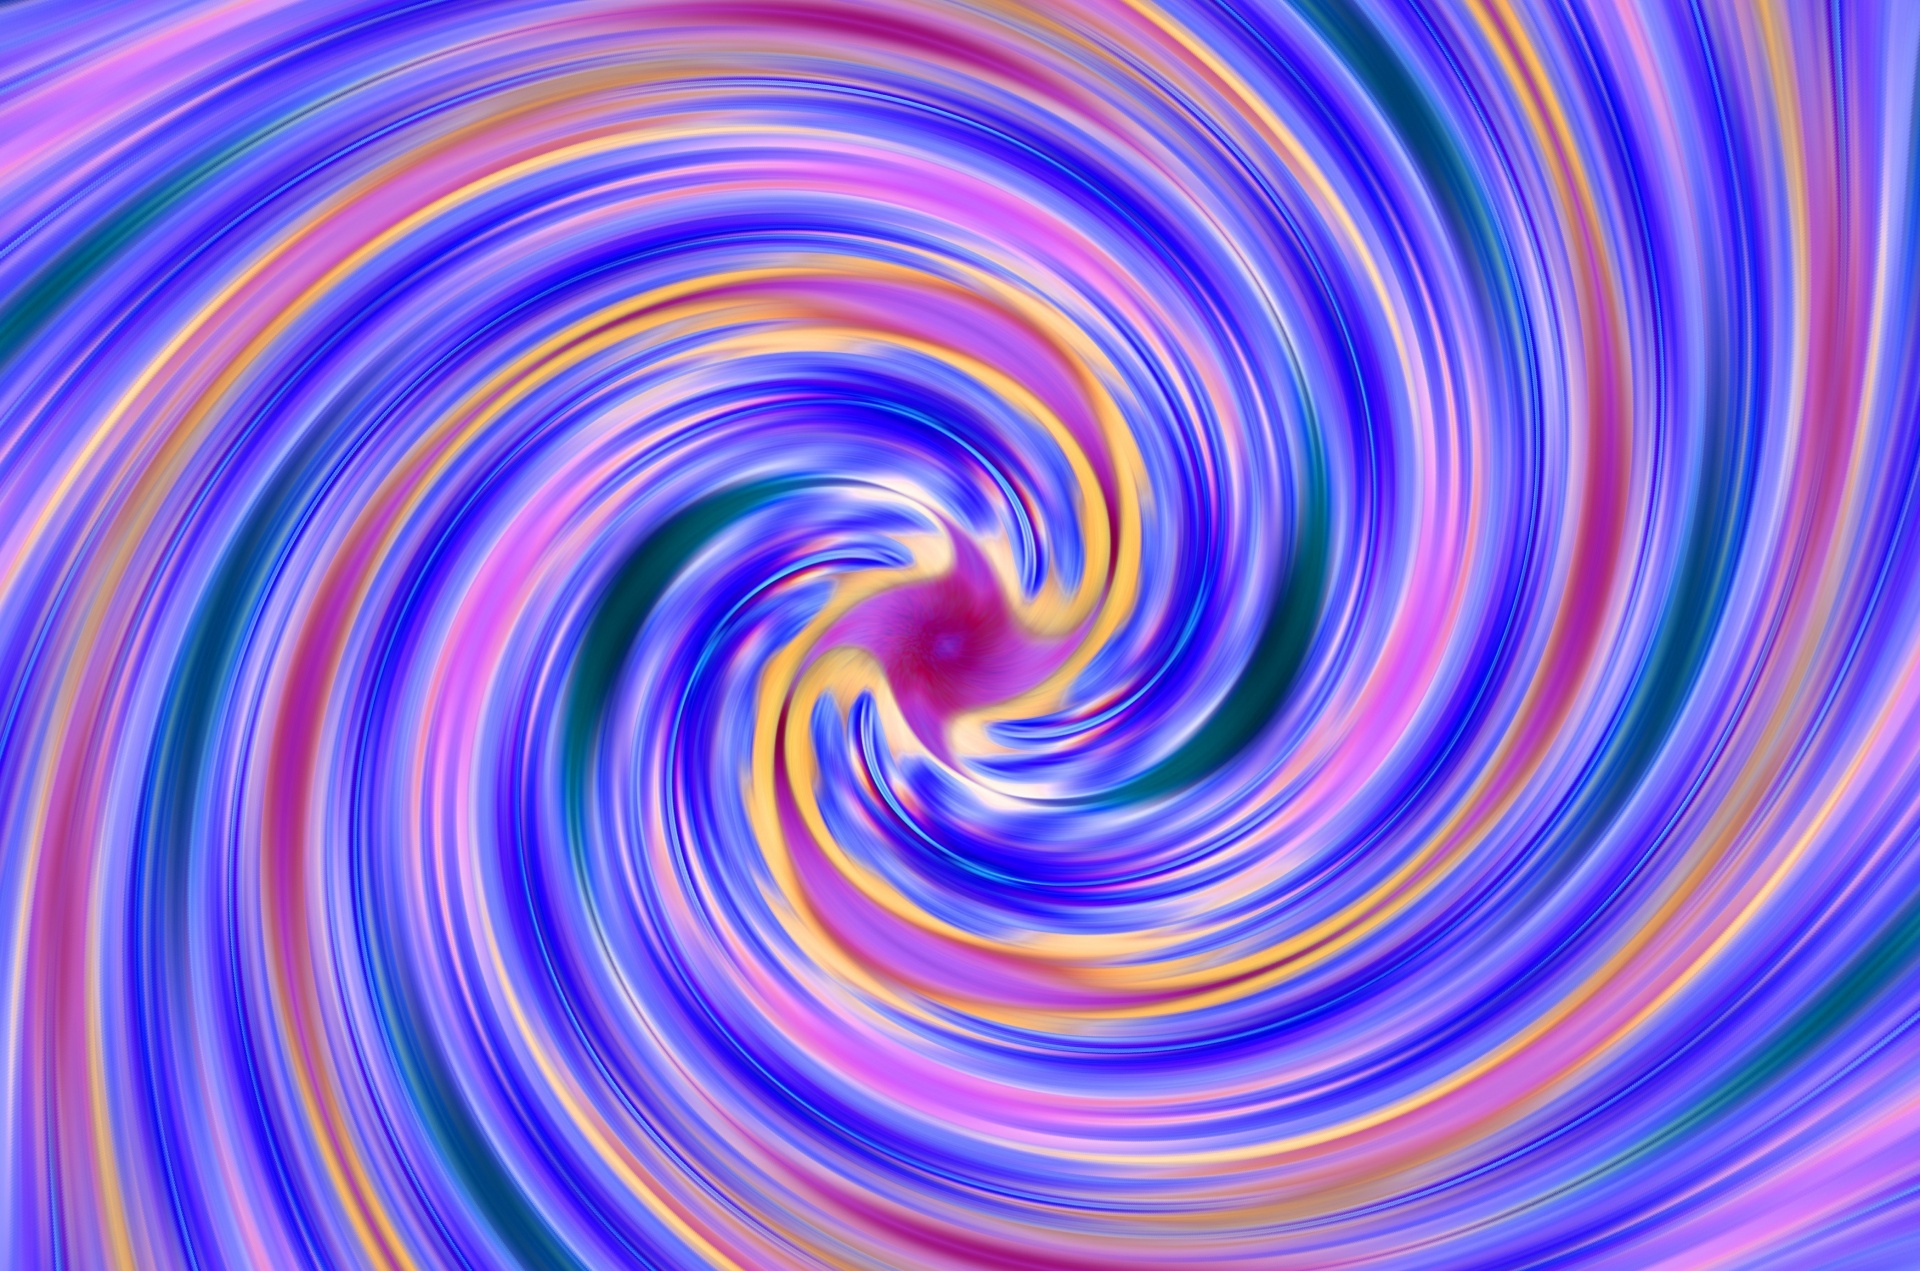 Download Twirl Spiral Muti-Coloured Free Photo.